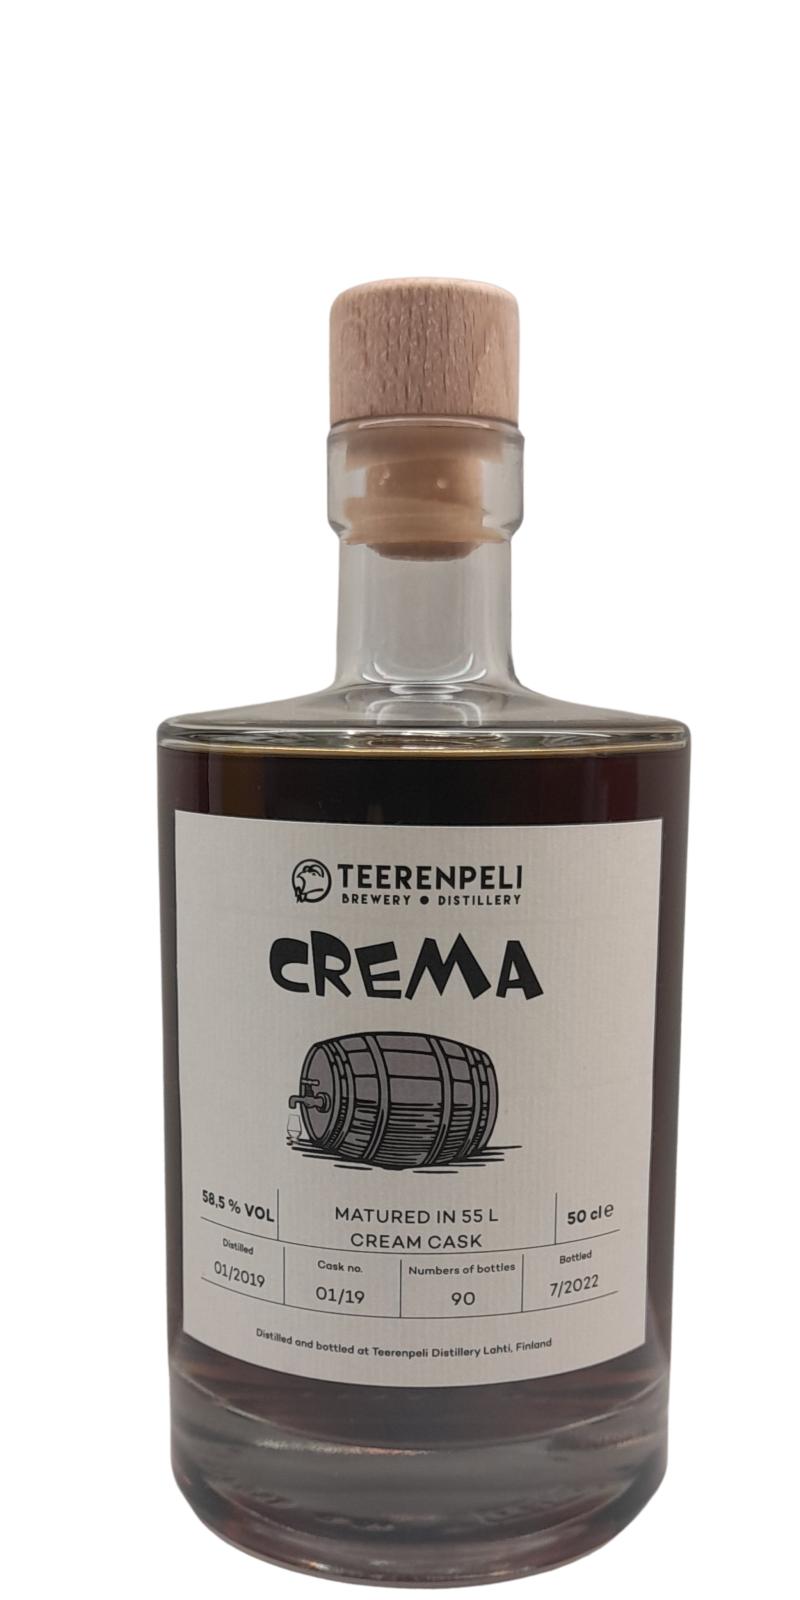 Teerenpeli 2019 Private Cask Whisky Crema Cream Sherry Cask 58.5% 500ml